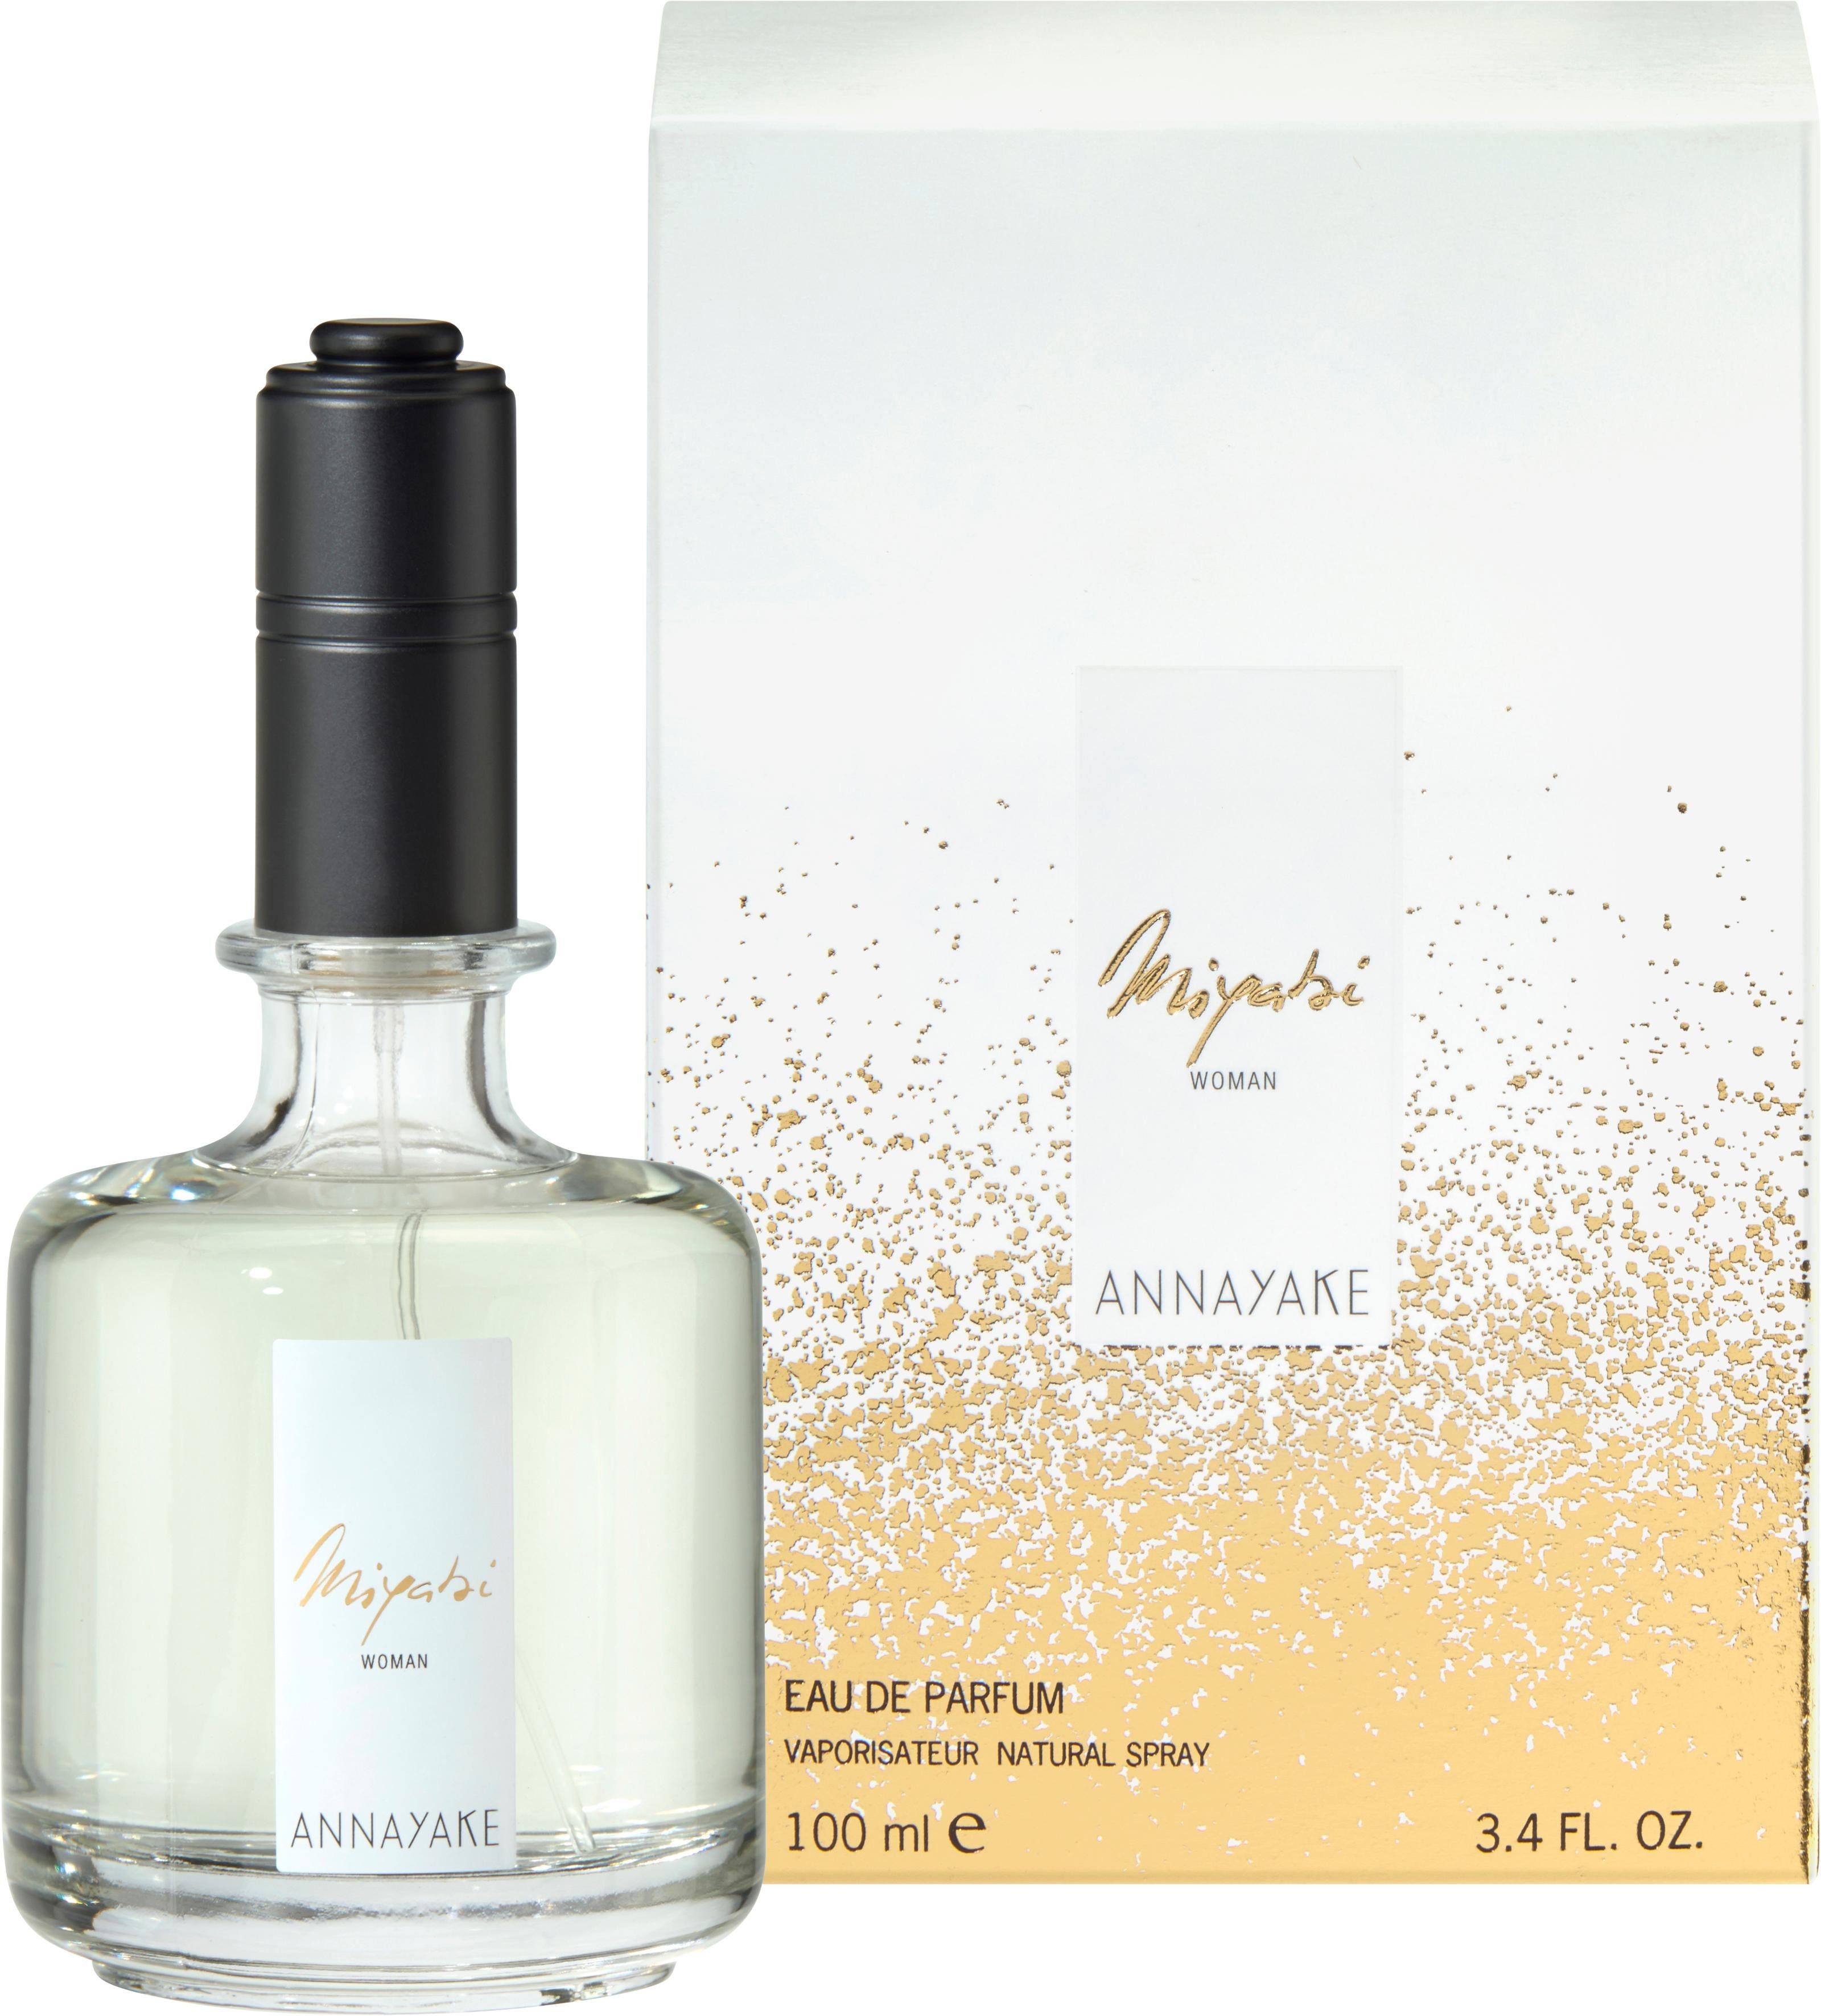 ANNAYAKE Eau de Parfum Woman Annayake Miyabi